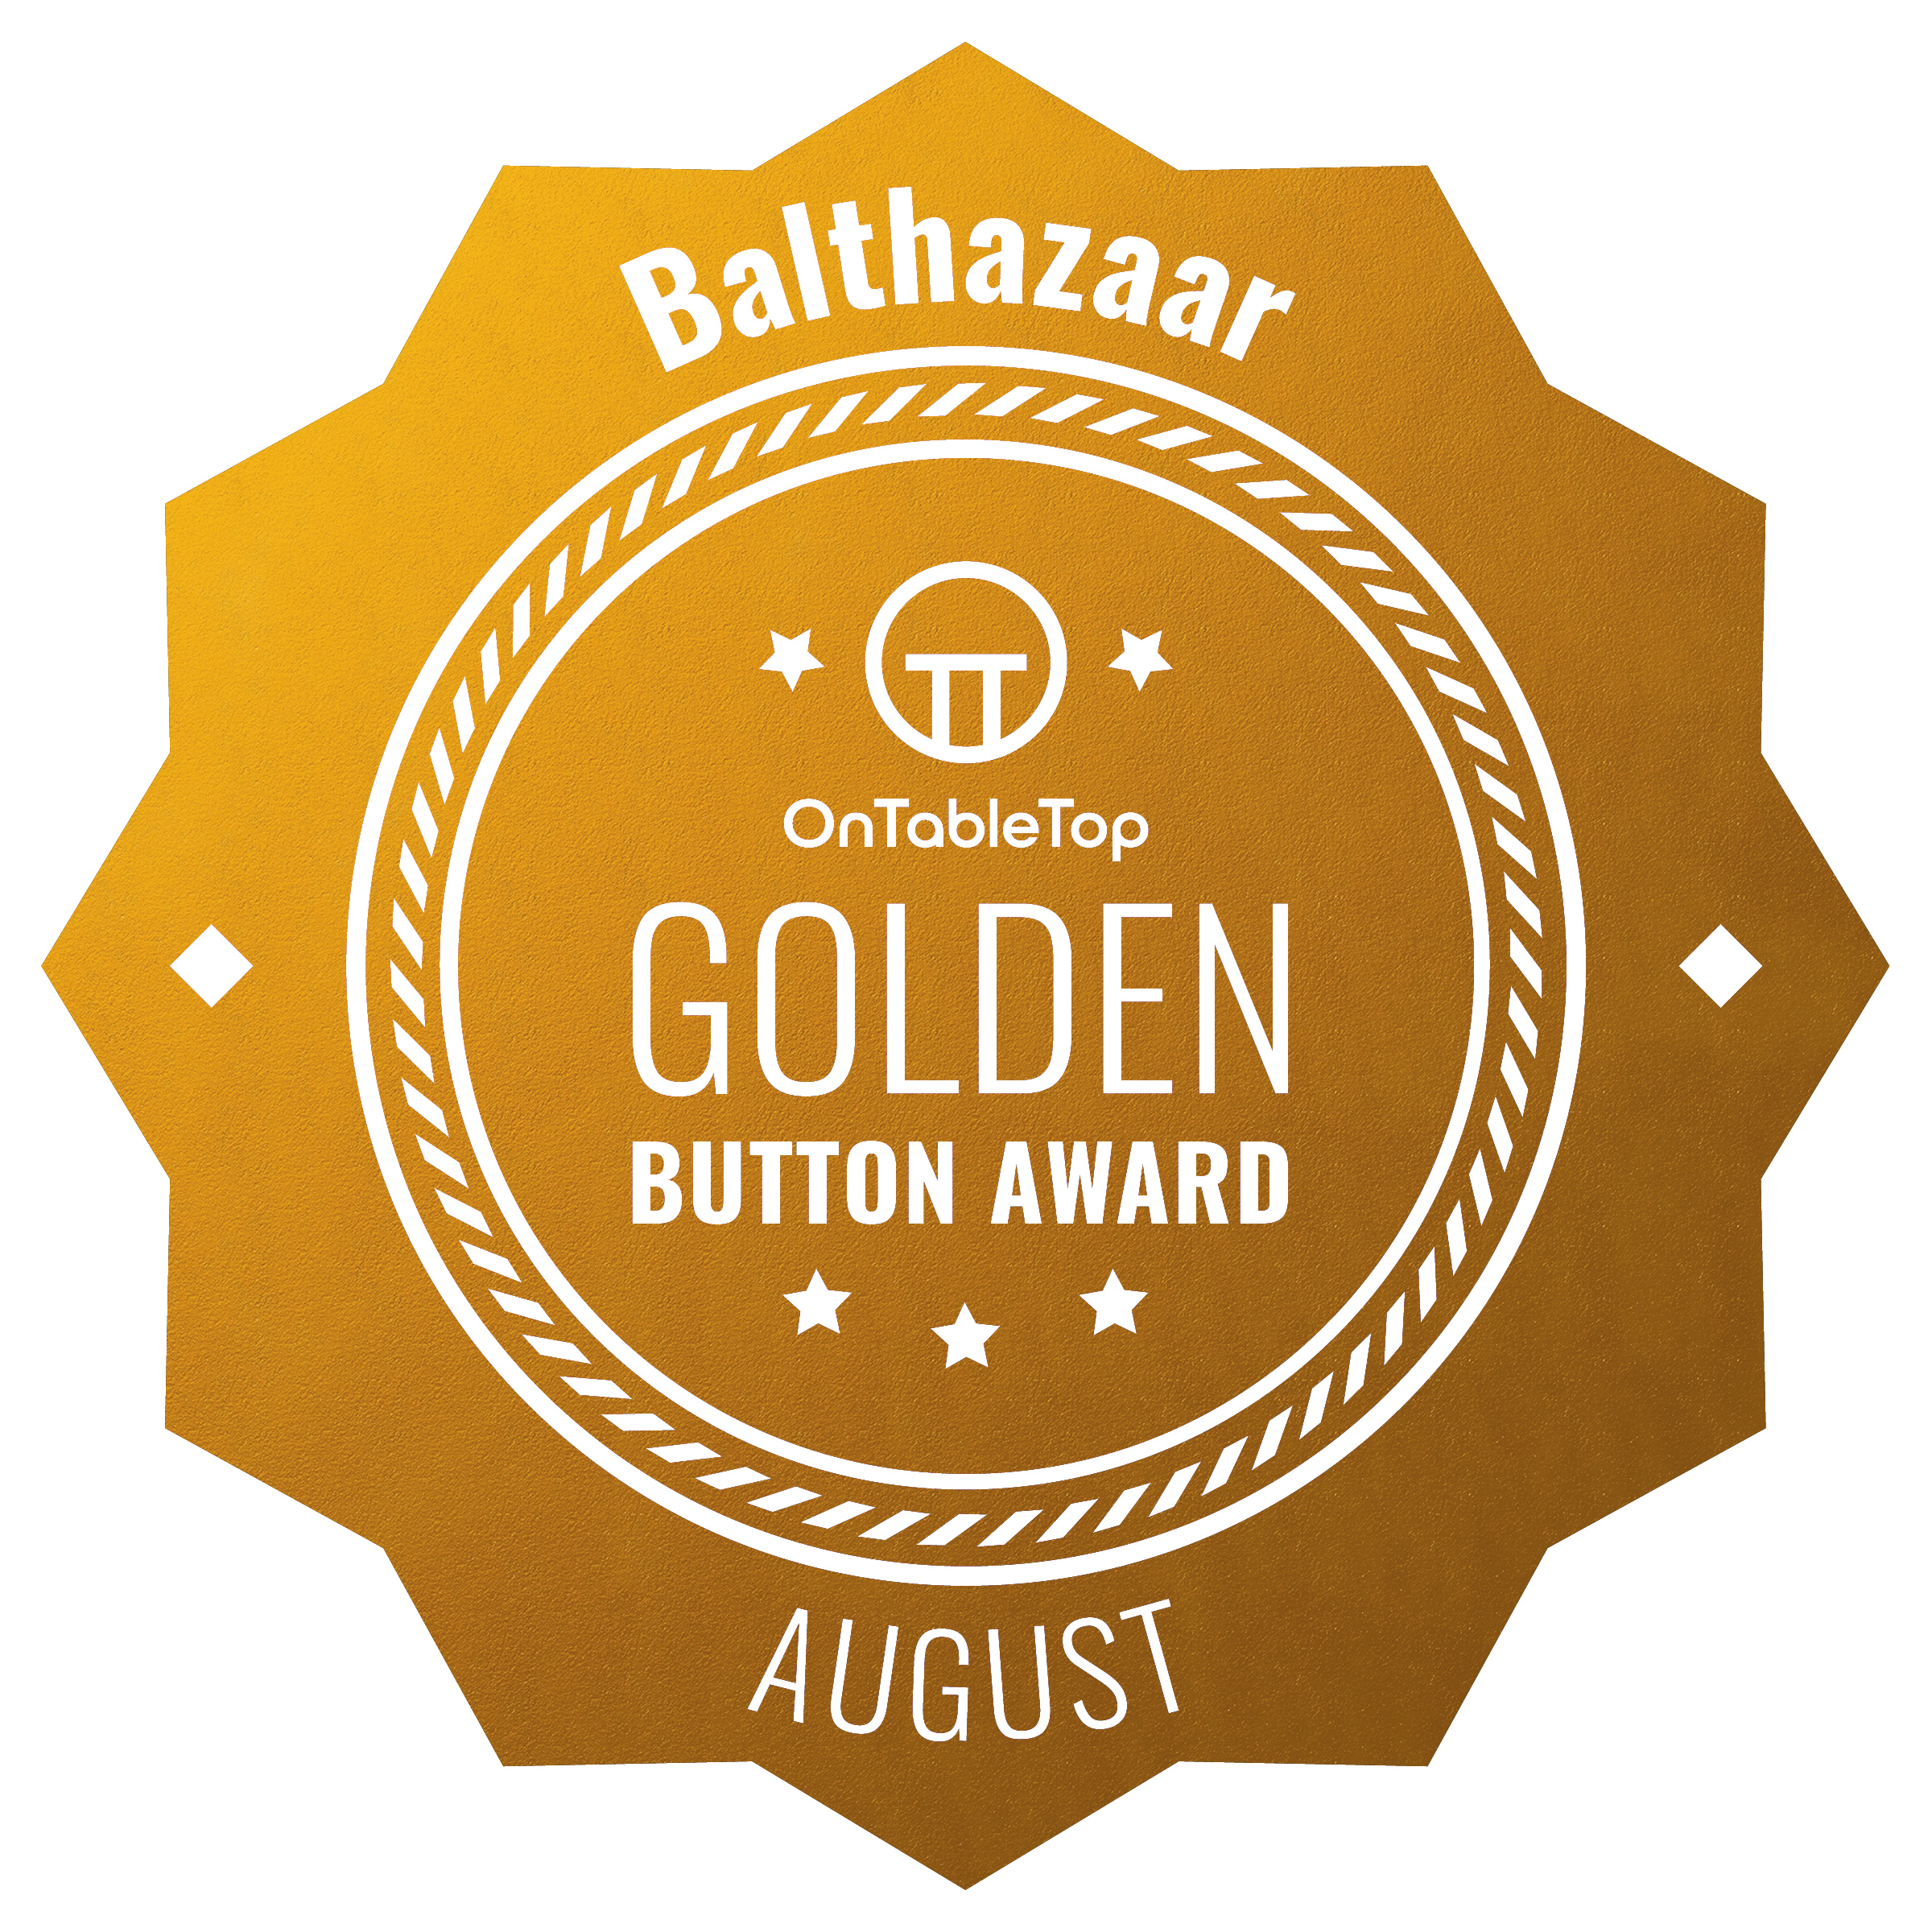 balthazaar-Badge